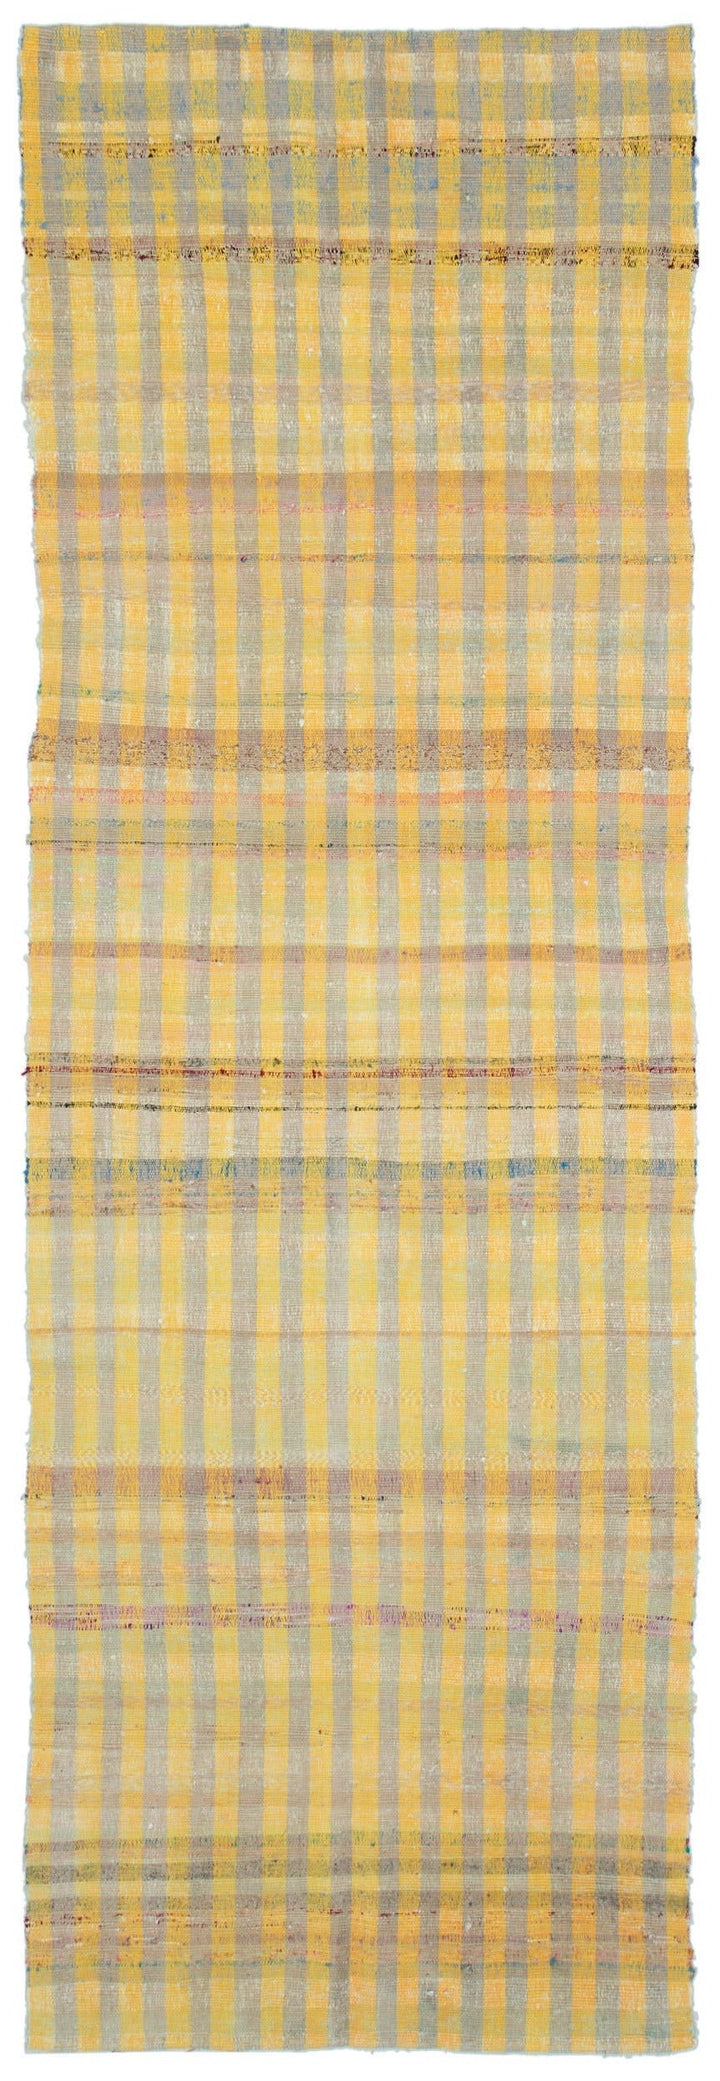 Cretan Yellow Striped Wool Hand-Woven Carpet 115 x 340